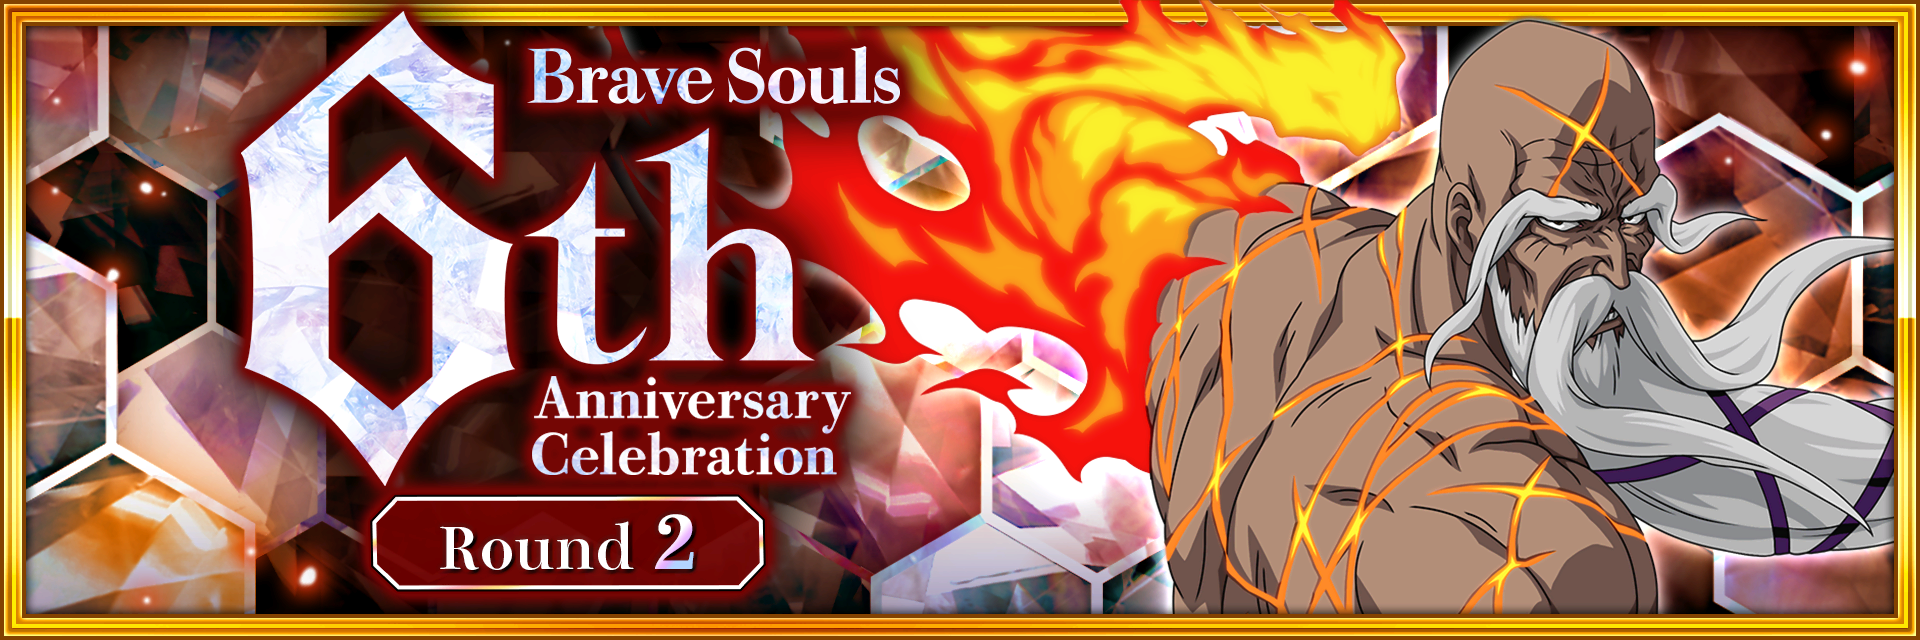 Bleach Brave Souls Brave Souls 6th Anniversary Celebration Round 2 Steam News